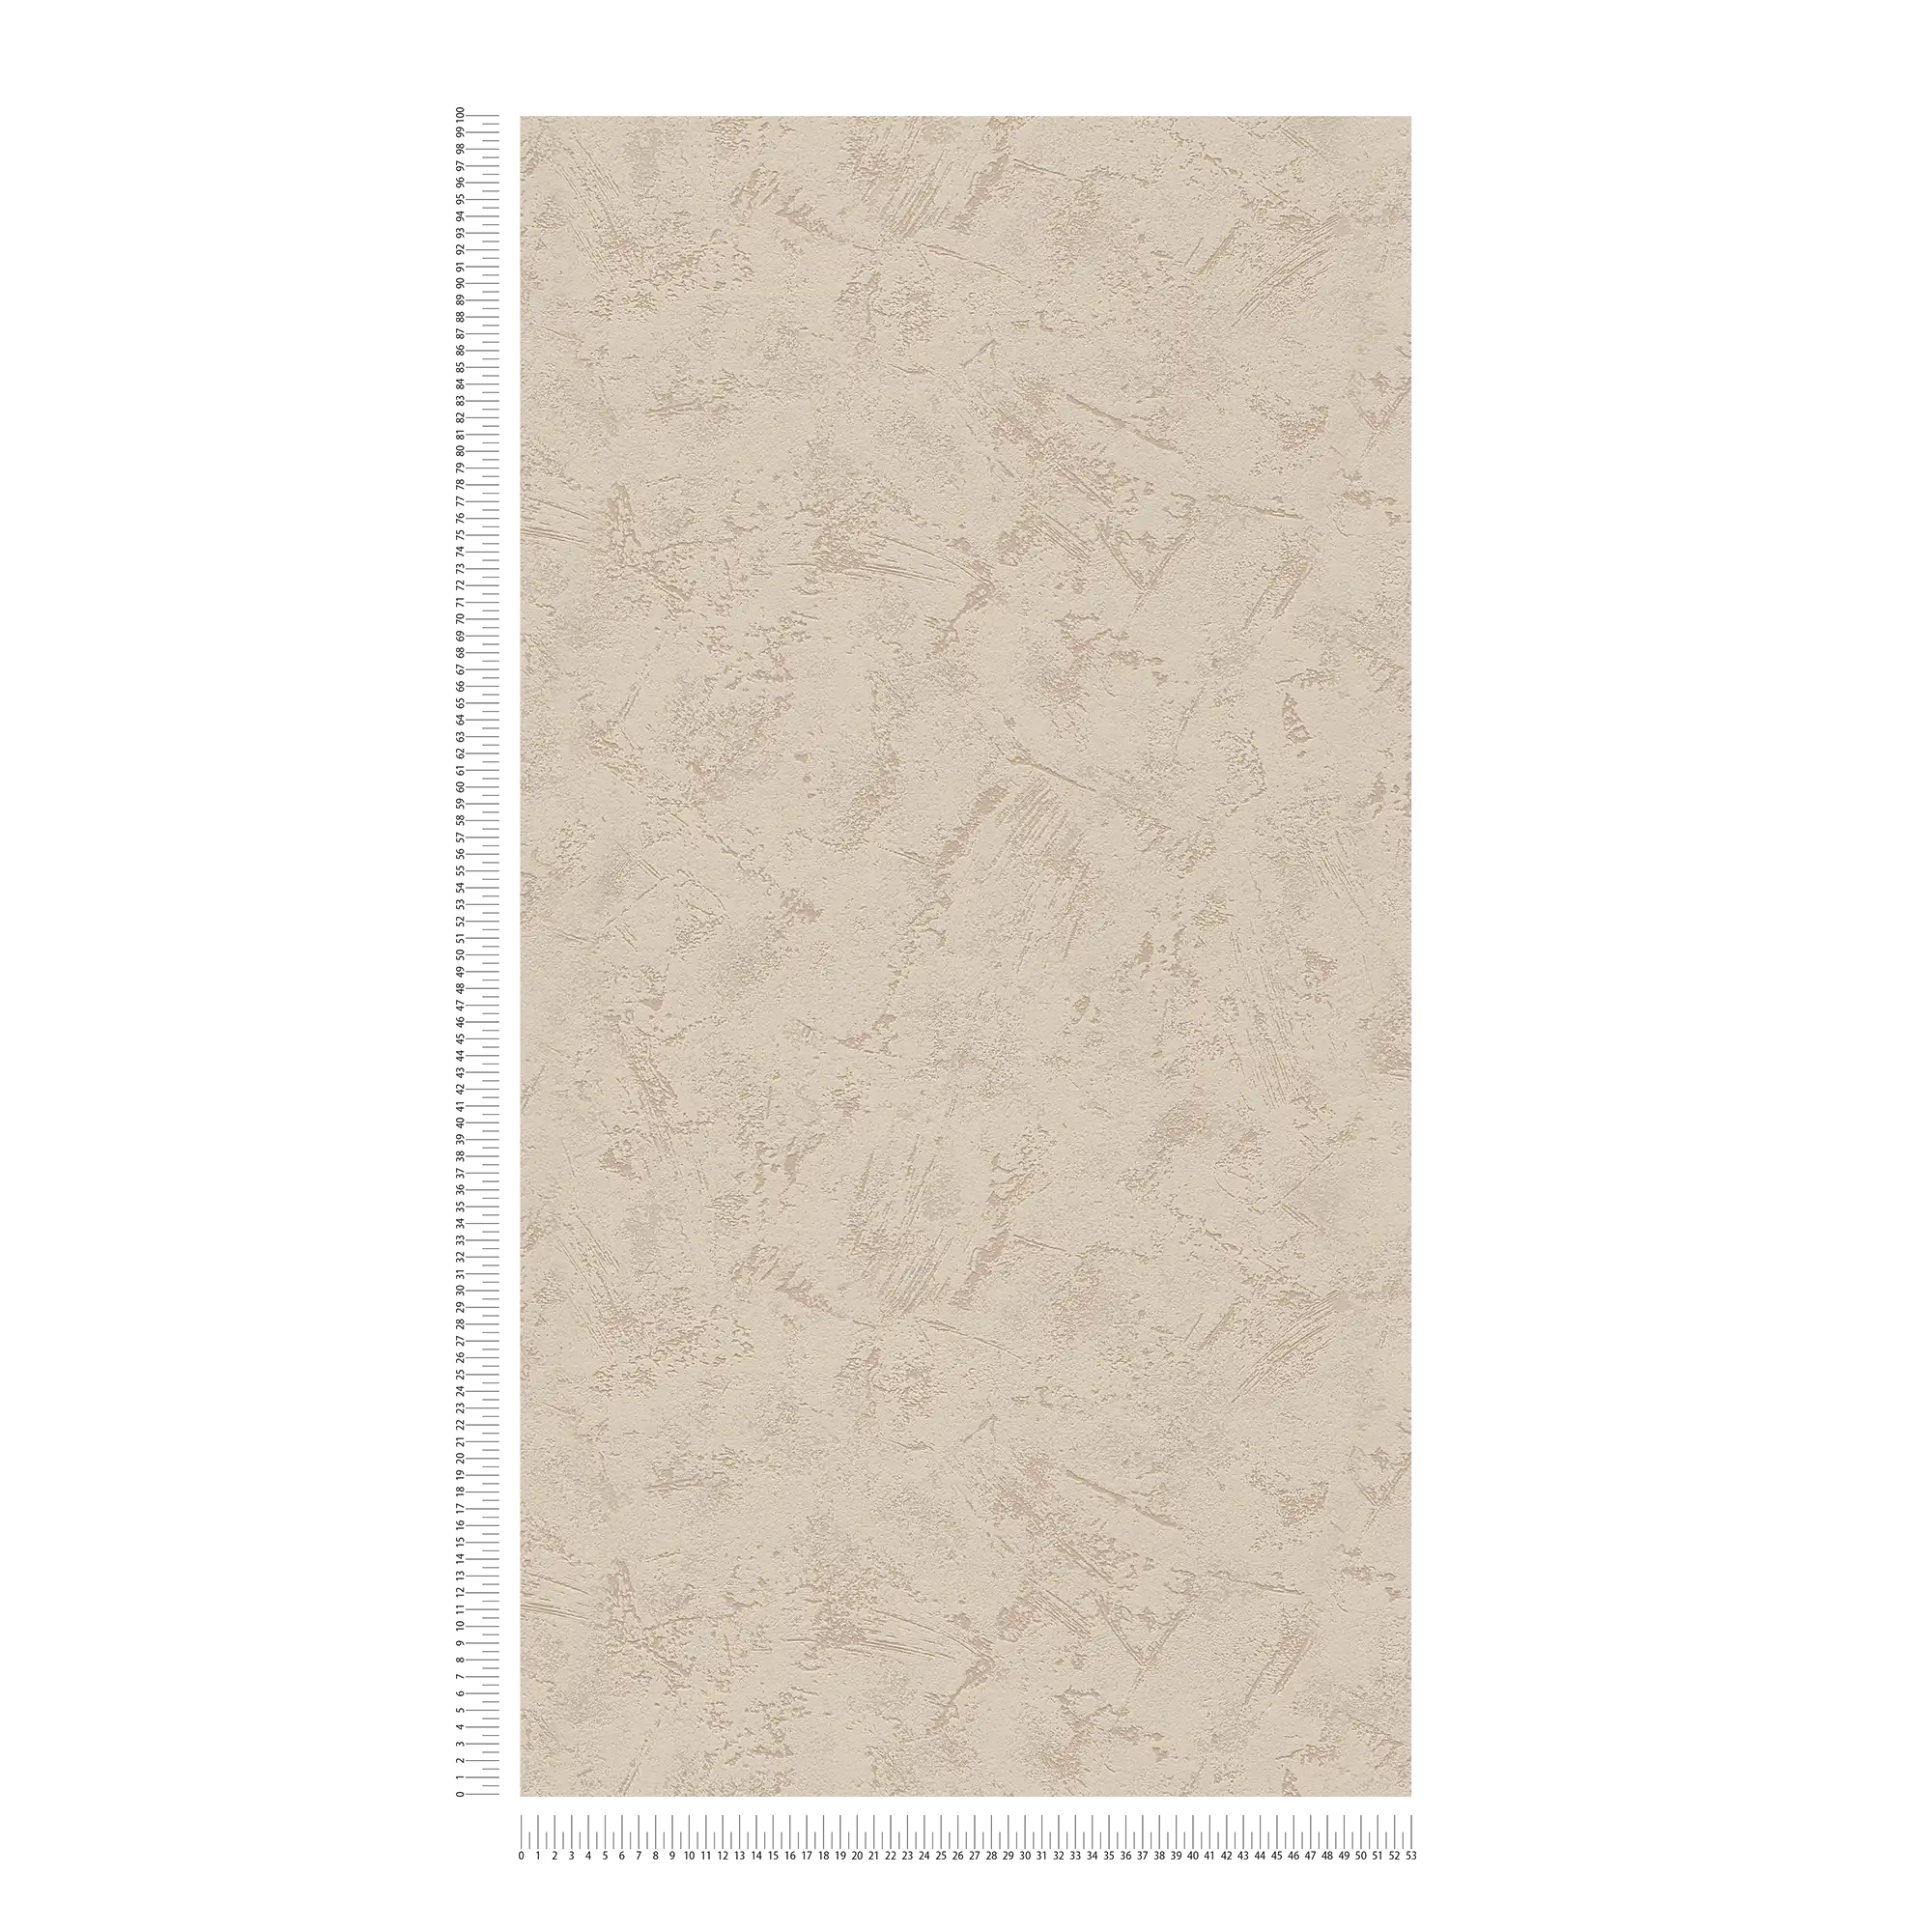             Trowel plaster wallpaper with foam structure & pattern - Brown
        